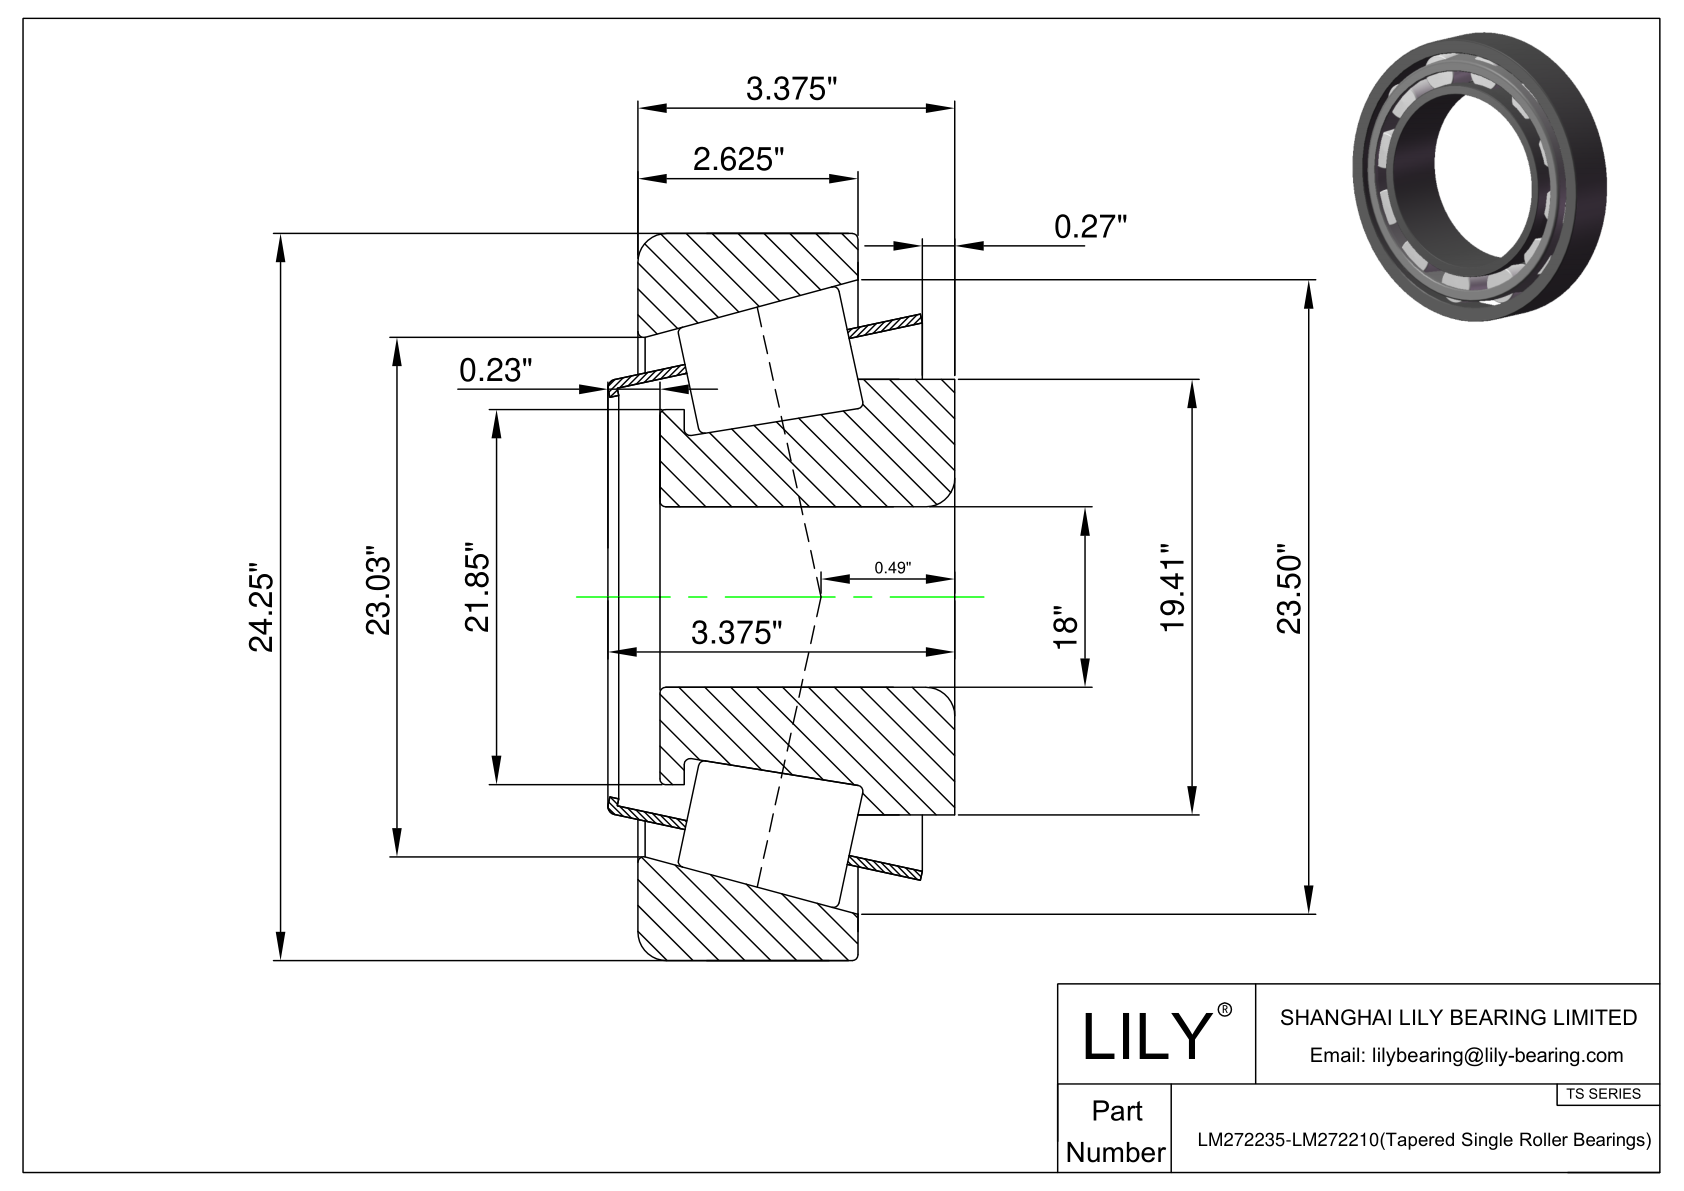 LM272235-LM272210 TS系列(圆锥单滚子轴承)(英制) CAD图形